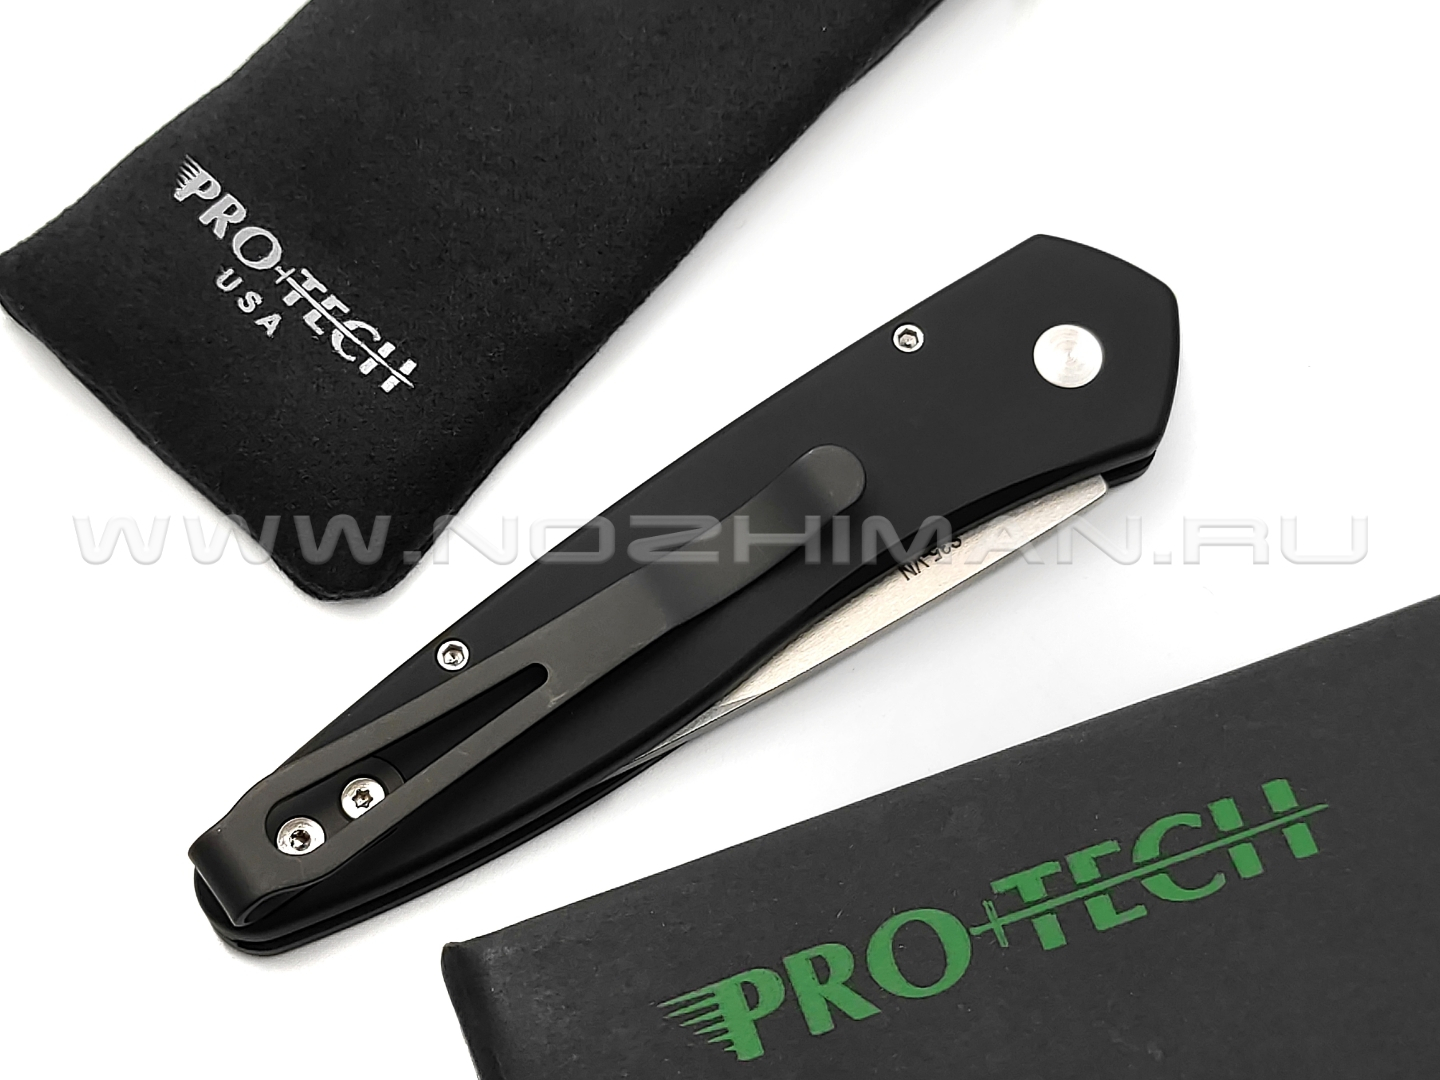 Нож Pro-Tech Newport 3405 сталь 154CM stonewash, рукоять Aluminum 6061-T6 black